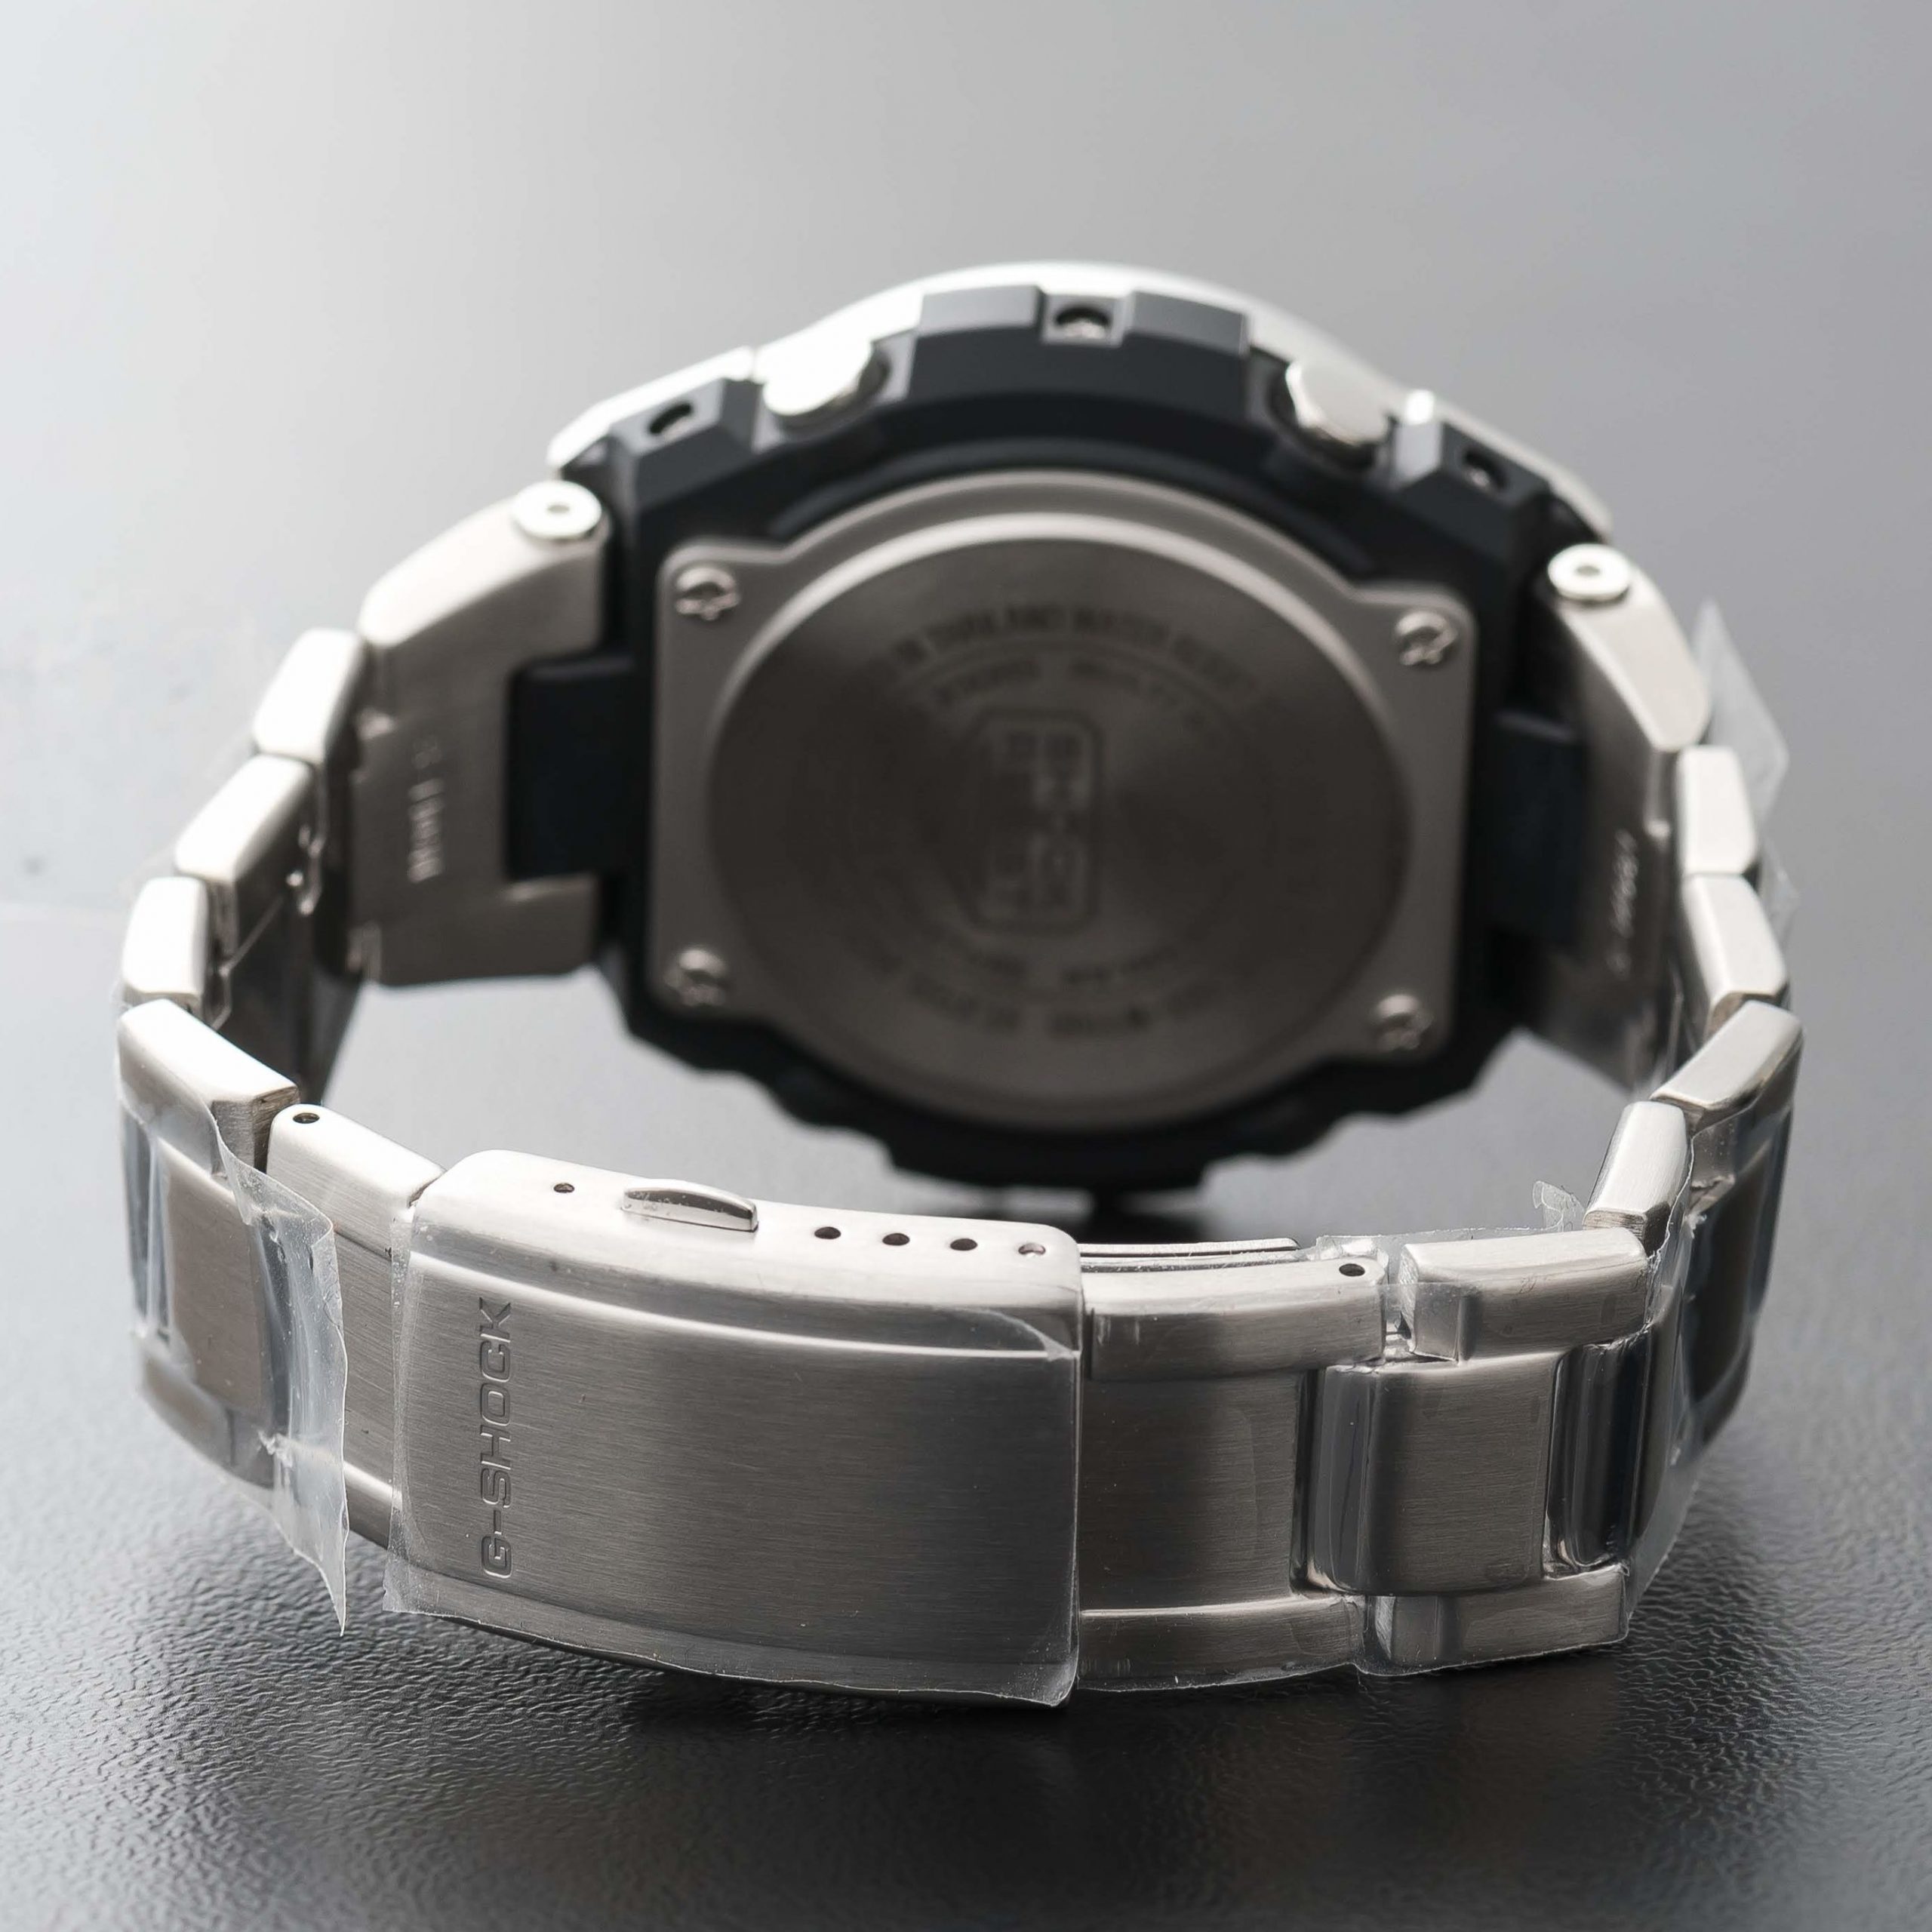 Casio G-Steel Alarm Radio Controlled World time Stailess Watch GST-W110D-1A9ER